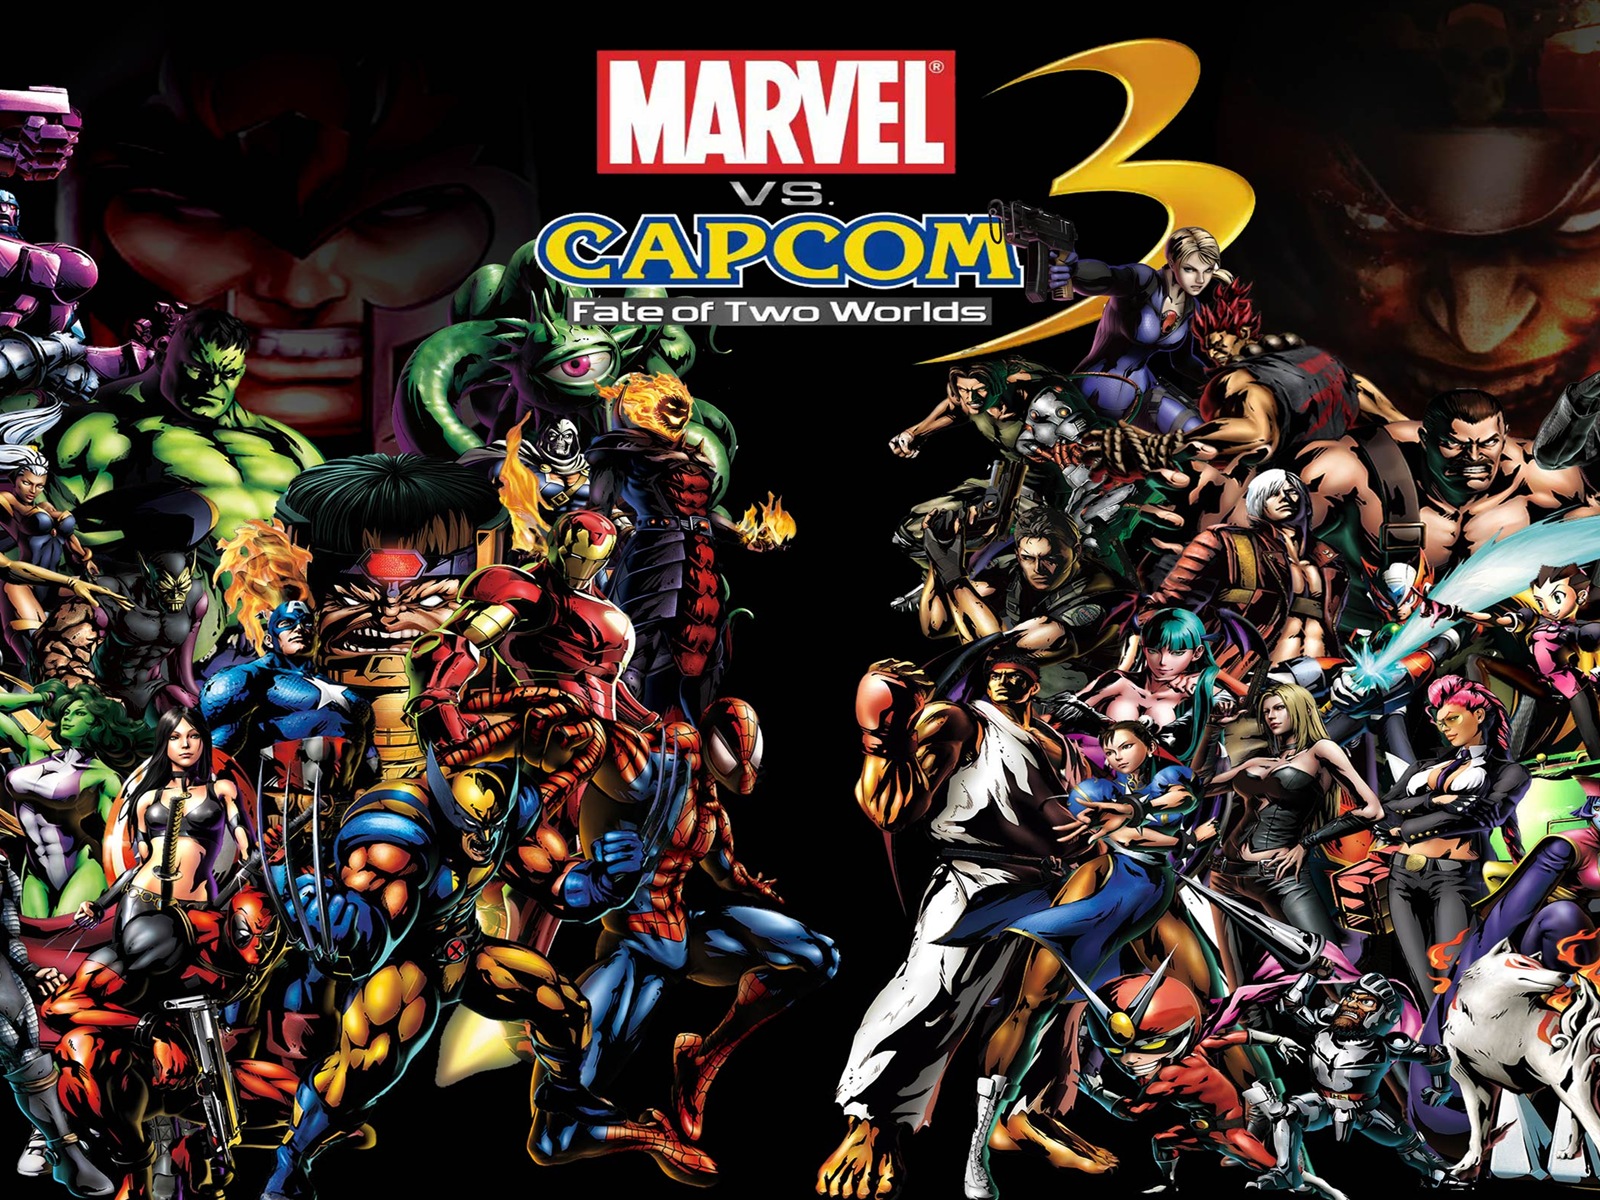 Marvel VS. Capcom 3: Fate of Two Worlds 漫画英雄VS.卡普空3 高清游戏壁纸1 - 1600x1200